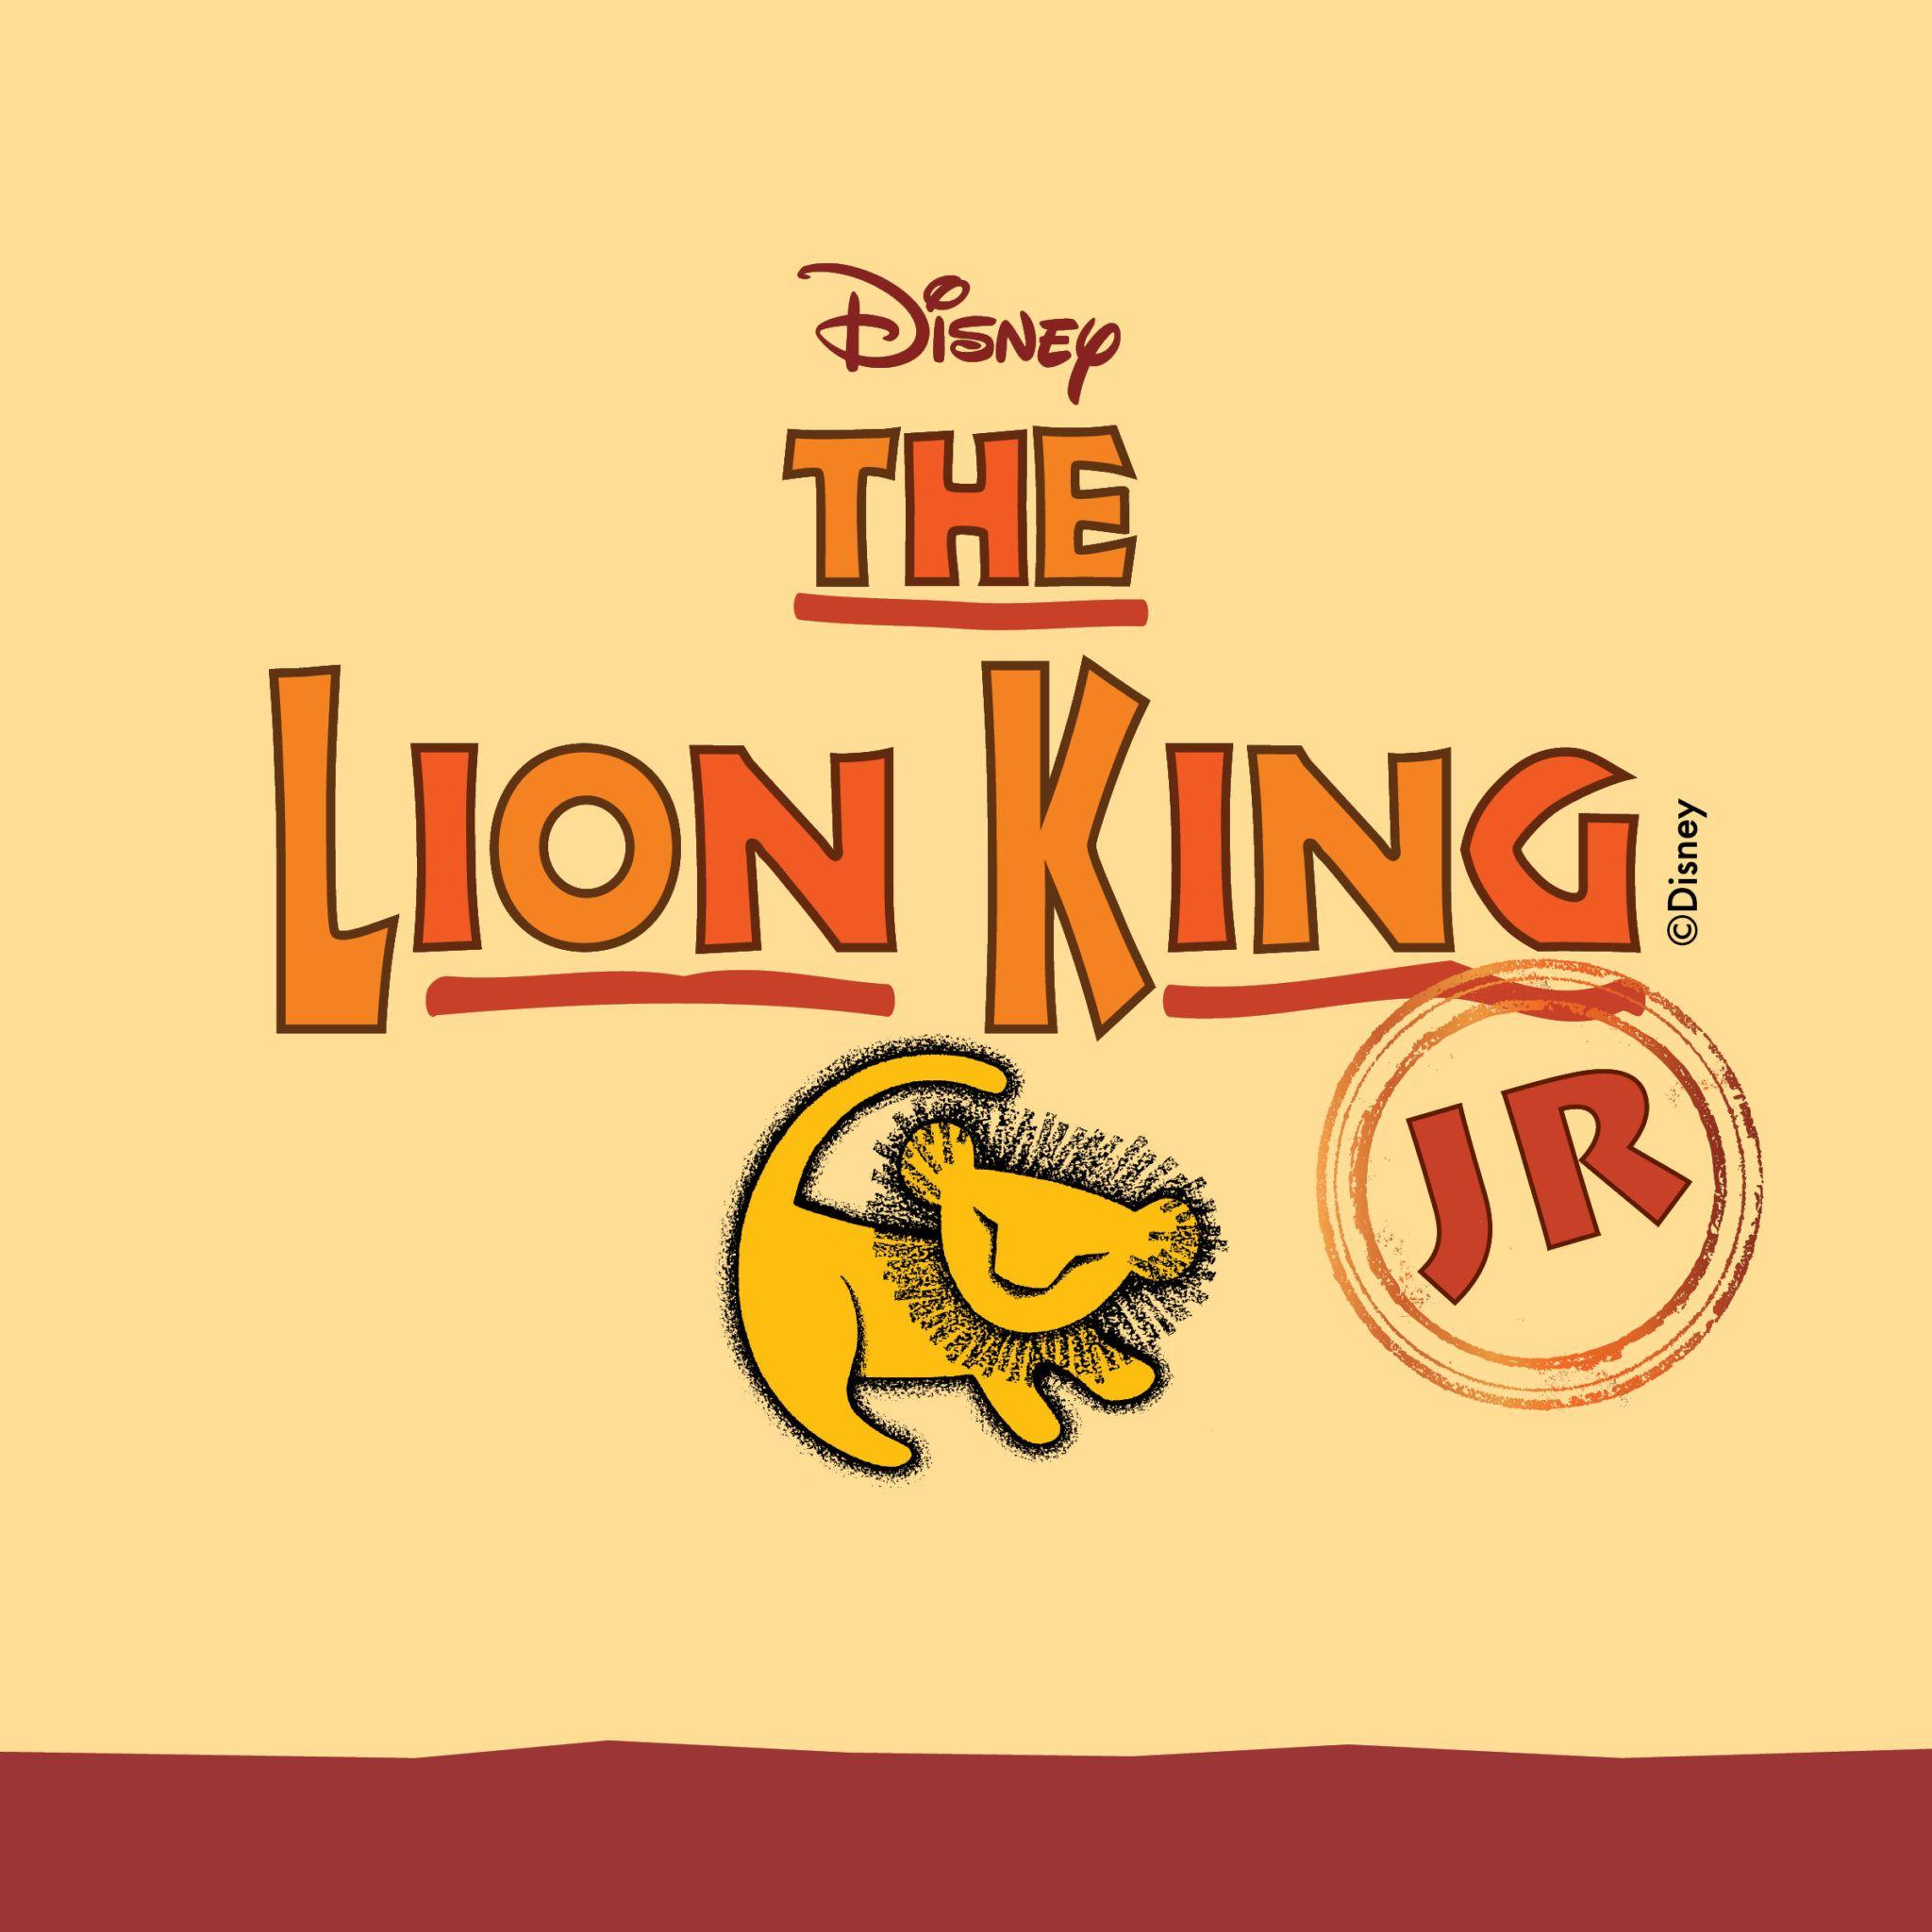 The Lion King Movie Logo - Disney's The Lion King, Jr. (Live Show) | Cavod Theatre in Lancaster ...